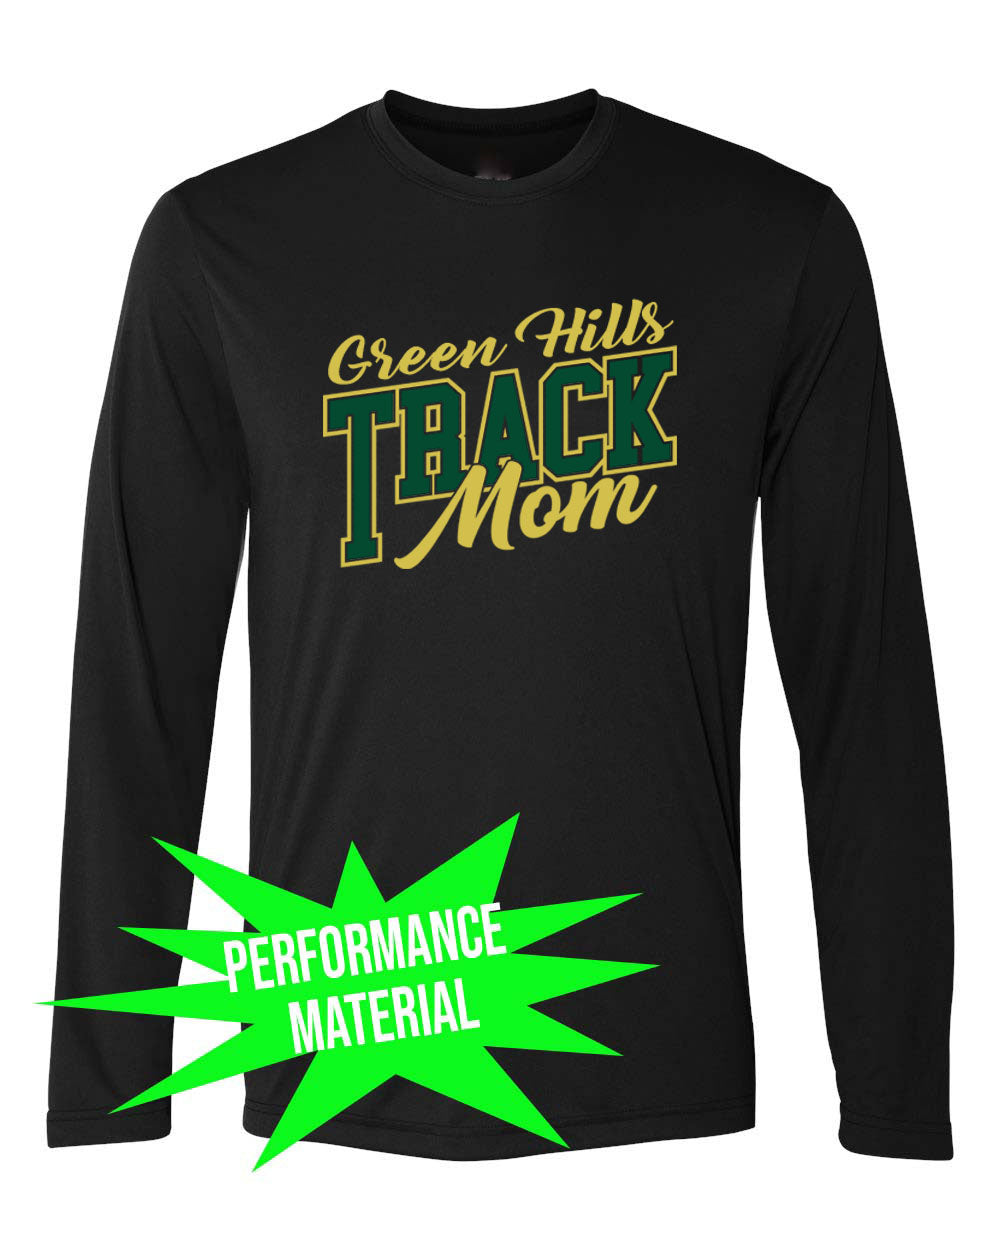 Green Hills Track Performance Material Design 5 Long Sleeve Shirt